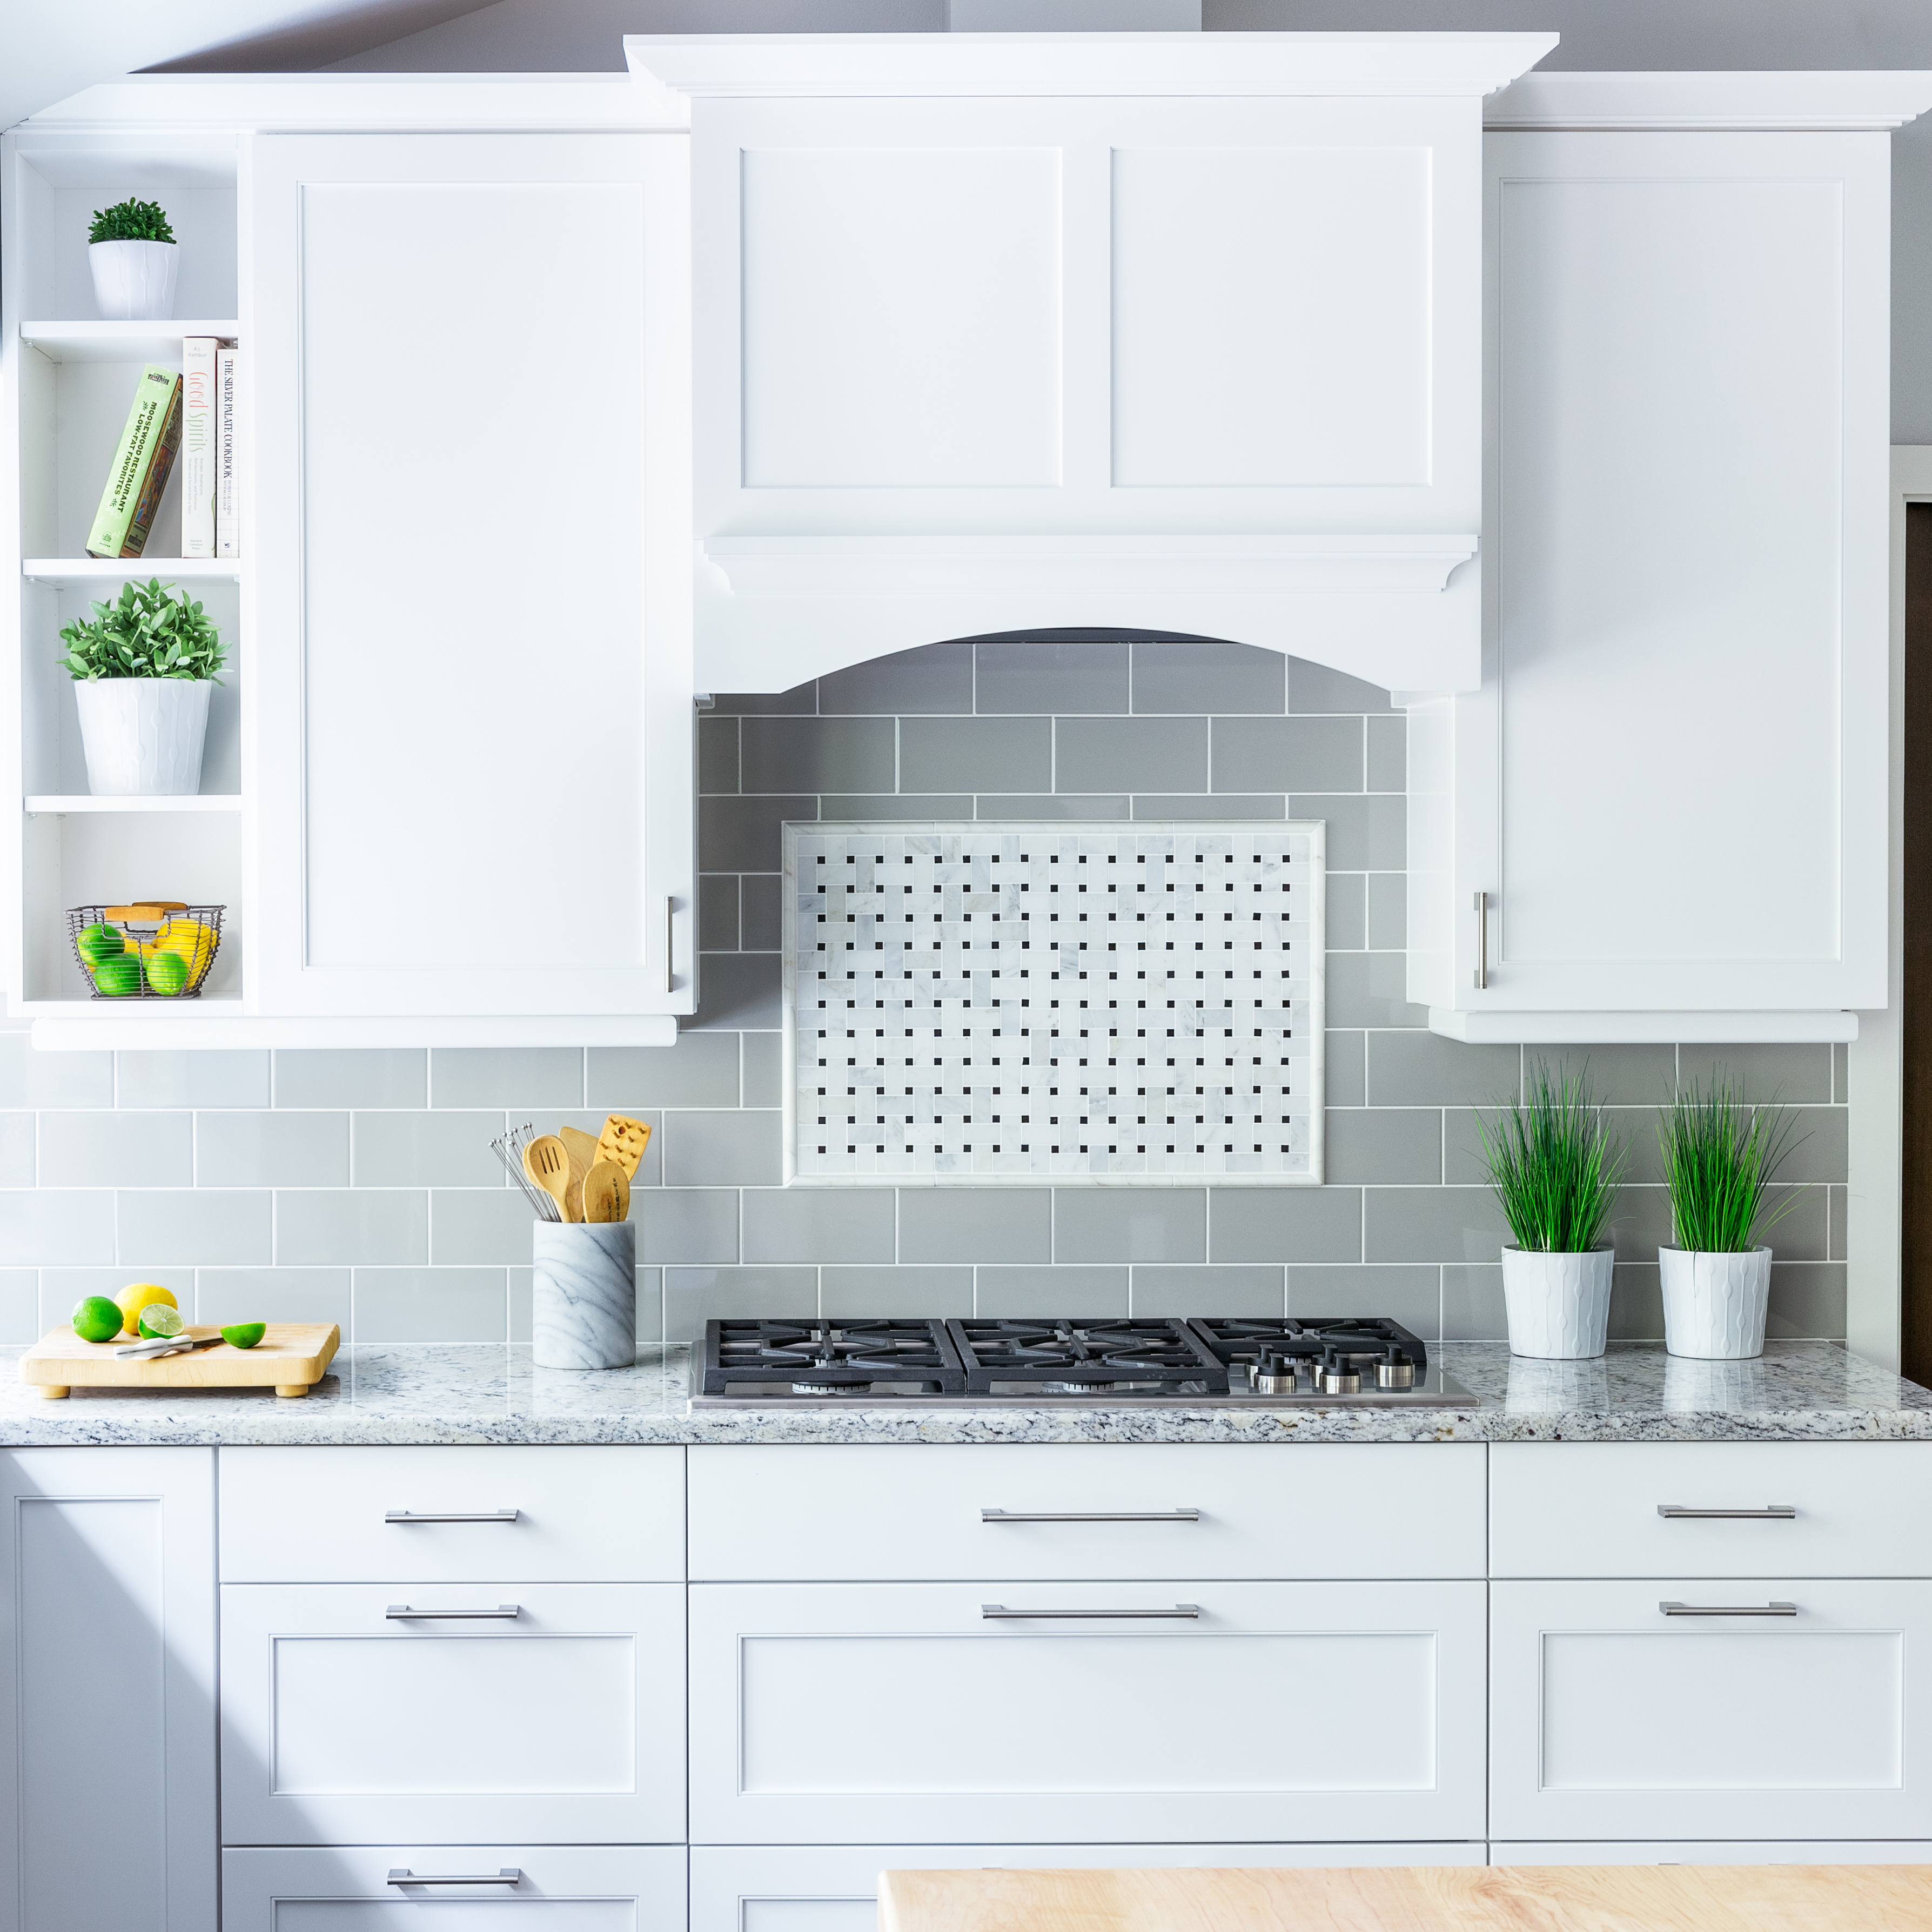 5 Gorgeous Kitchen Backsplash Ideas To Liven Up Your Home